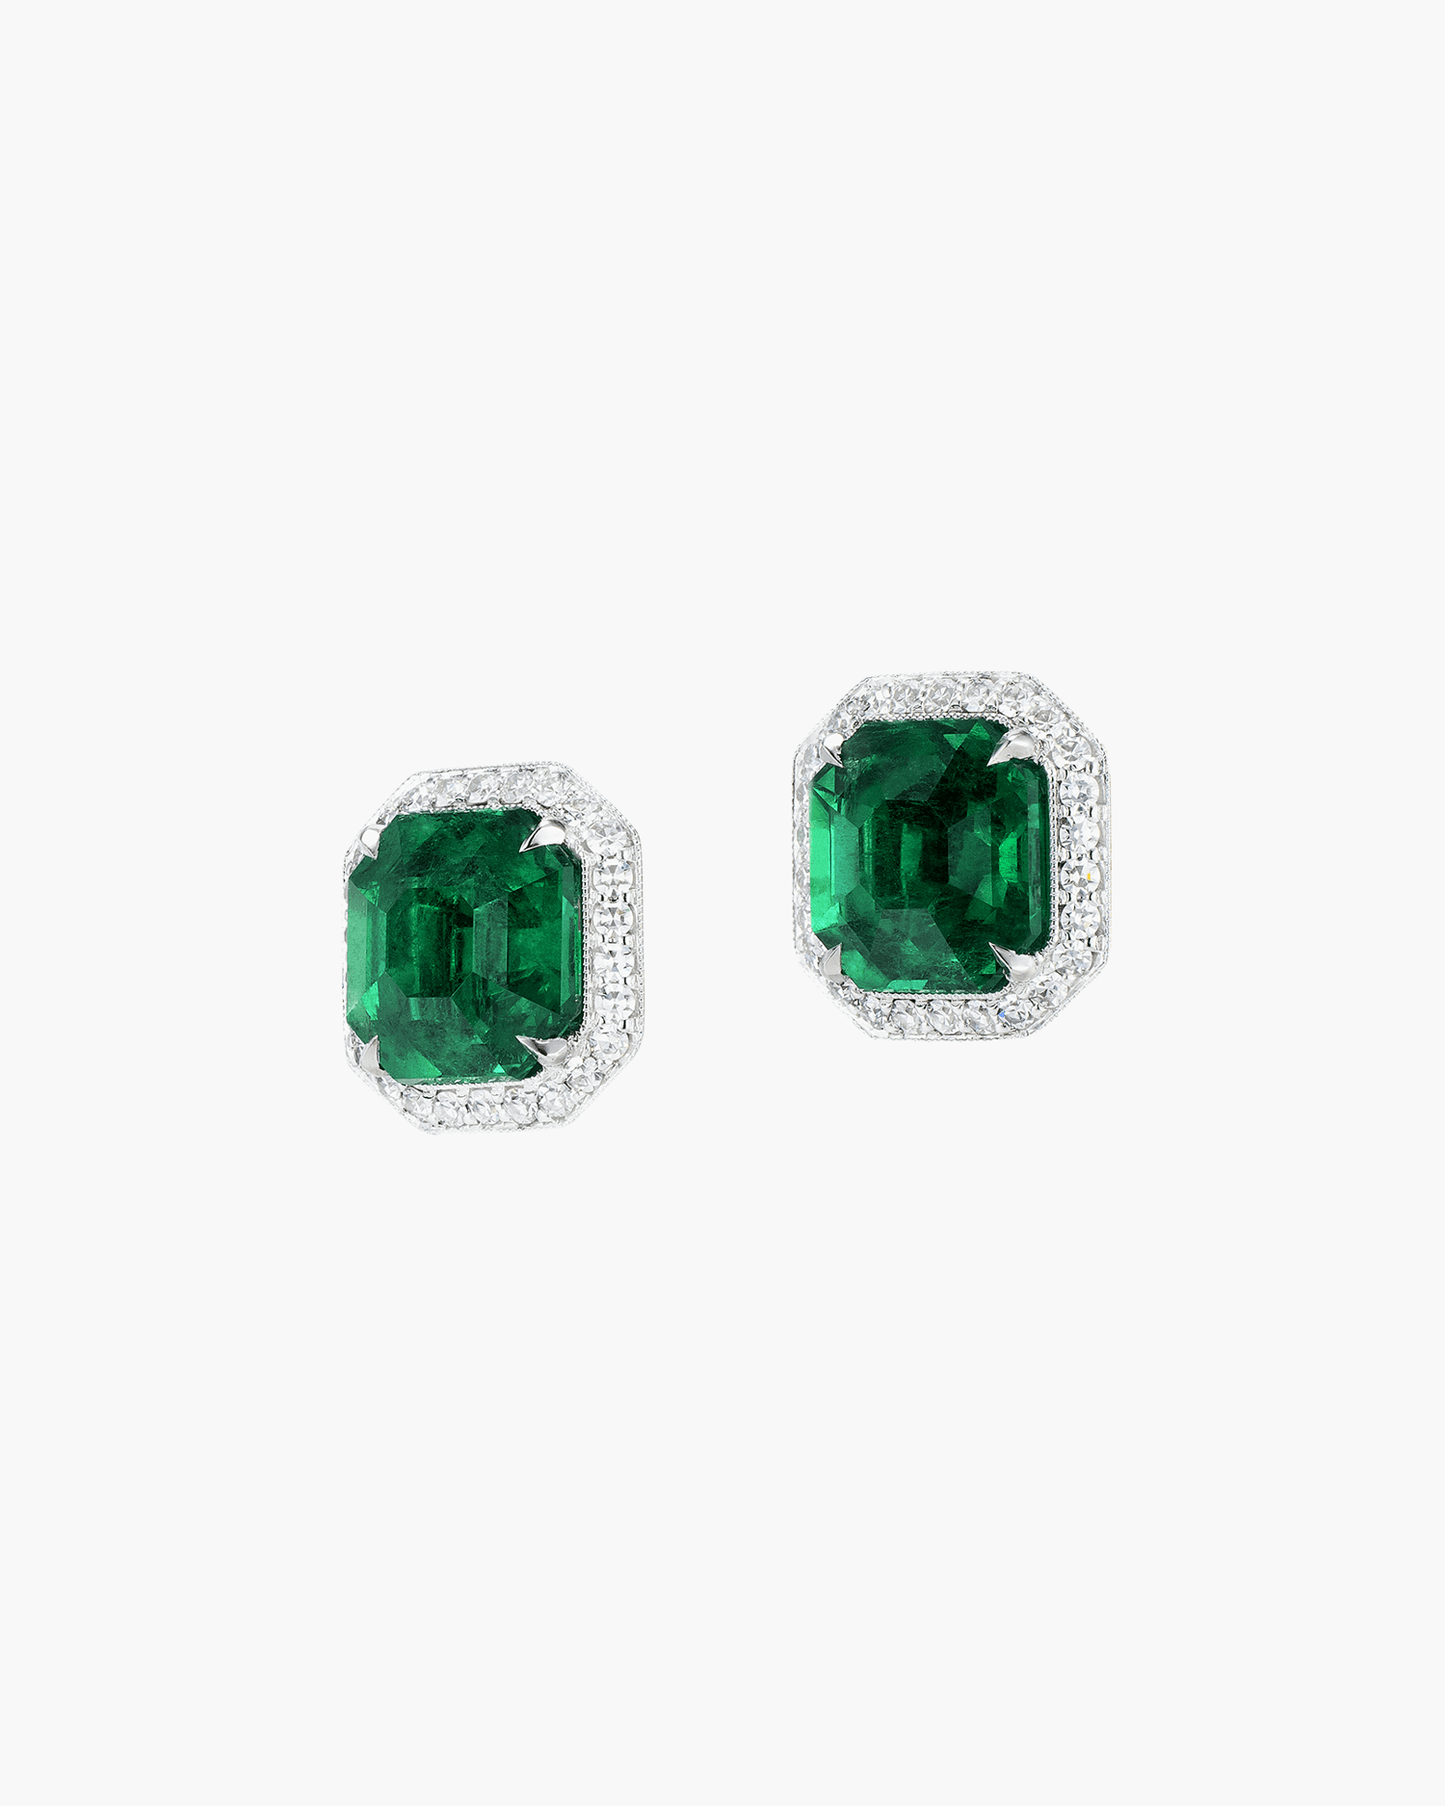 5.37 carat Emerald Cut Colombian Emerald and Diamond Ear Studs